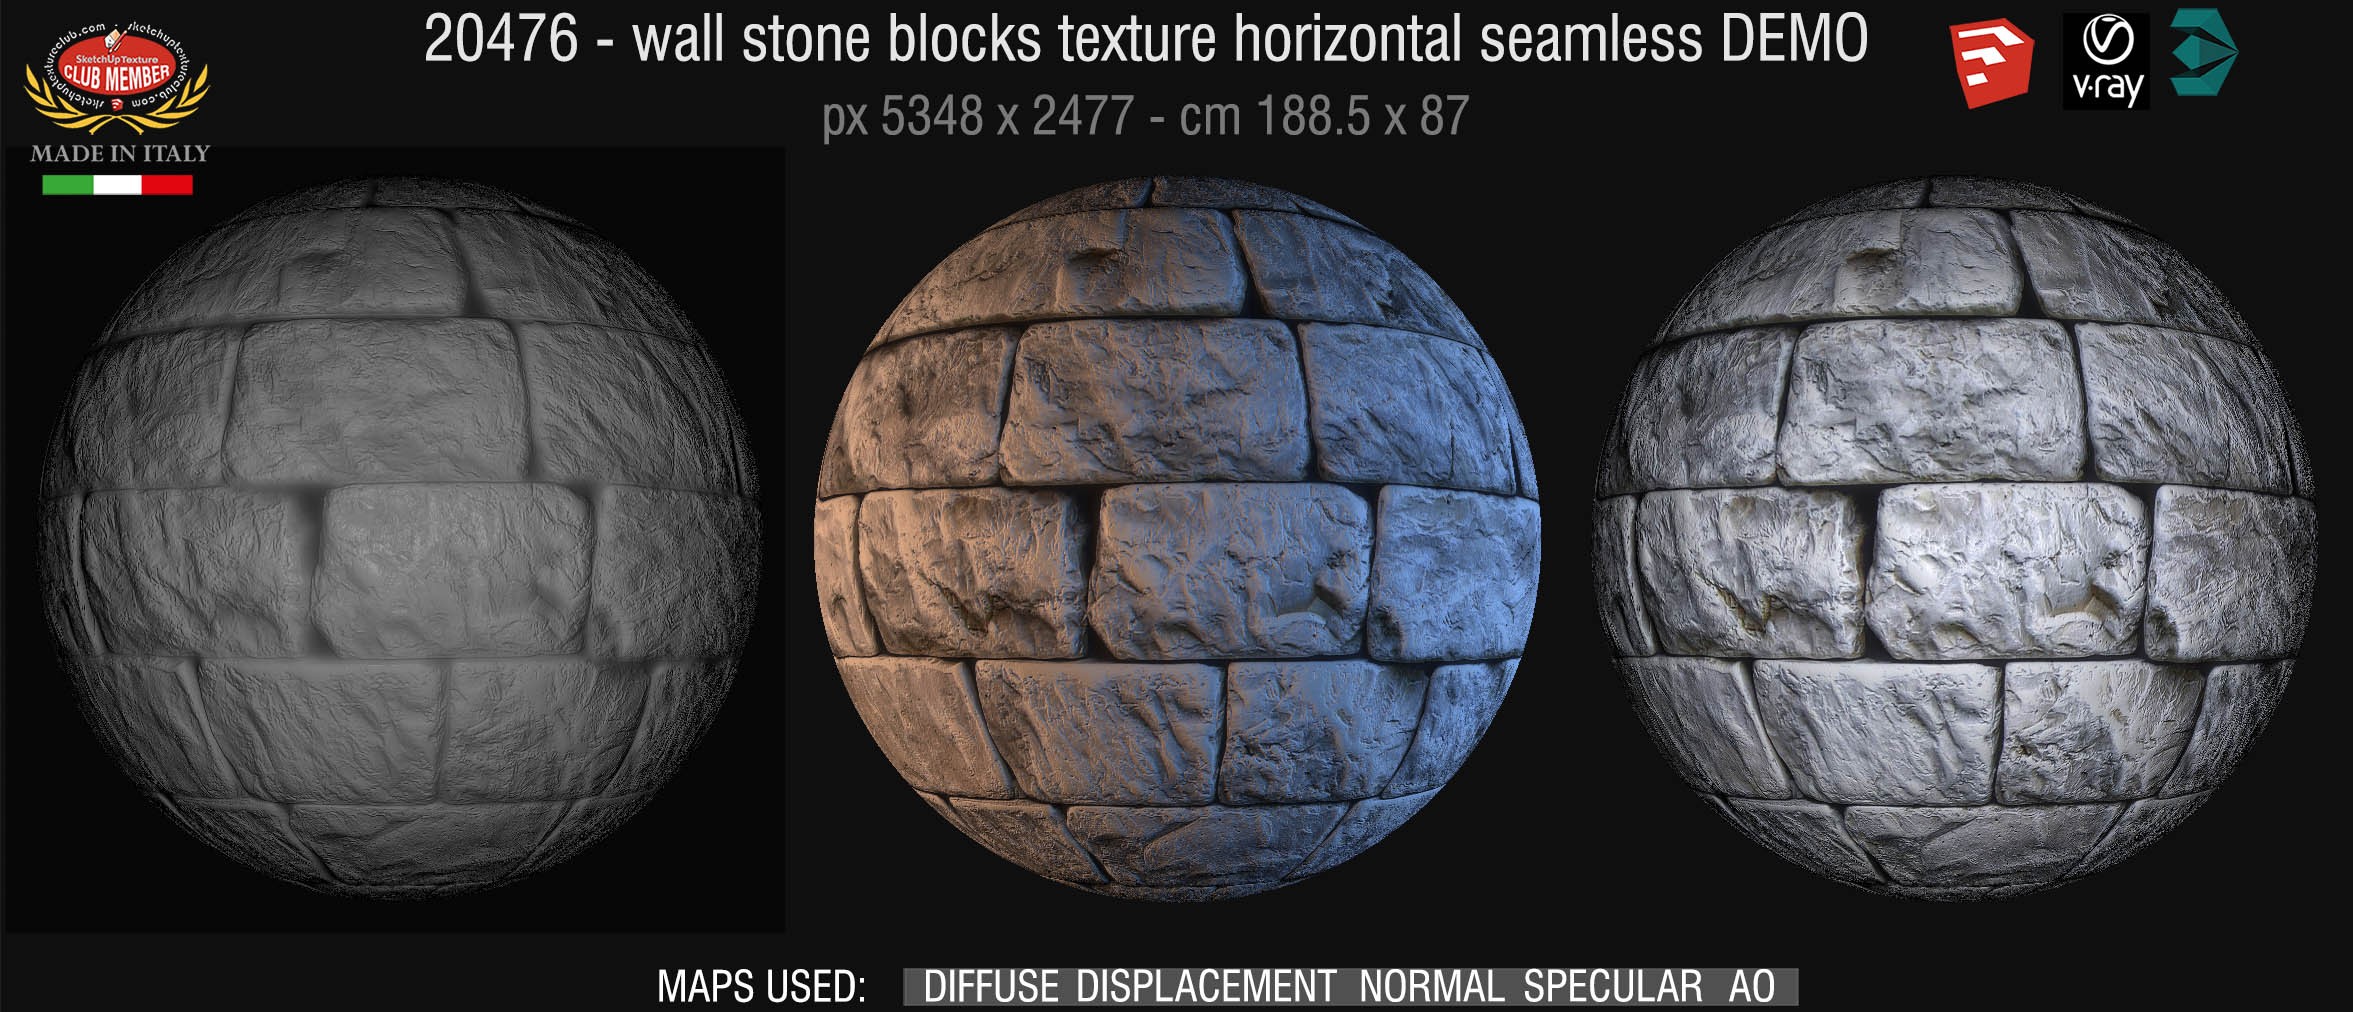 20476 HR Wall stone blocks texture + maps DEMO